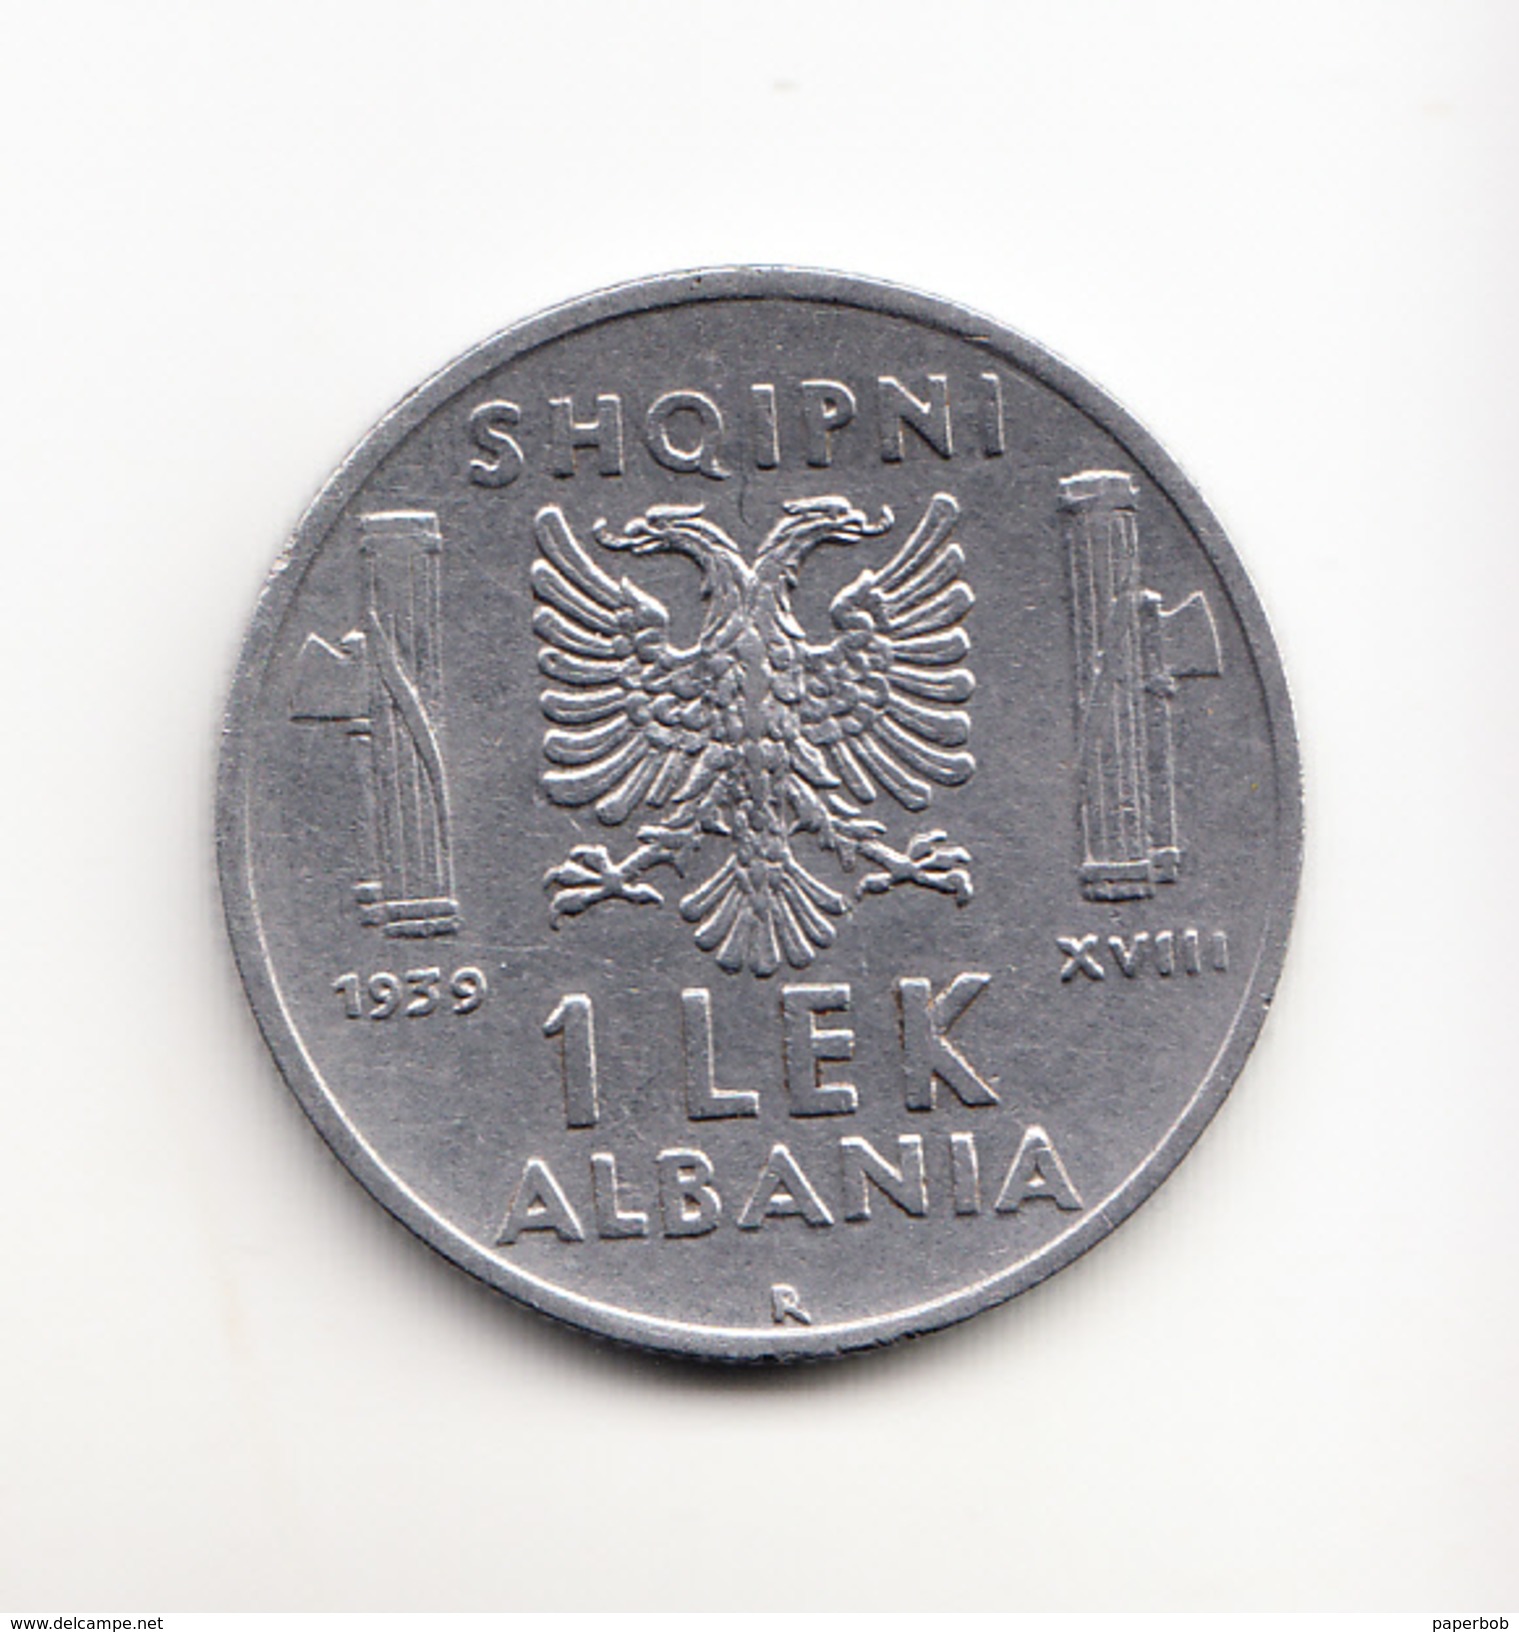 ALBANIA 1 LEK 1939 - Albania